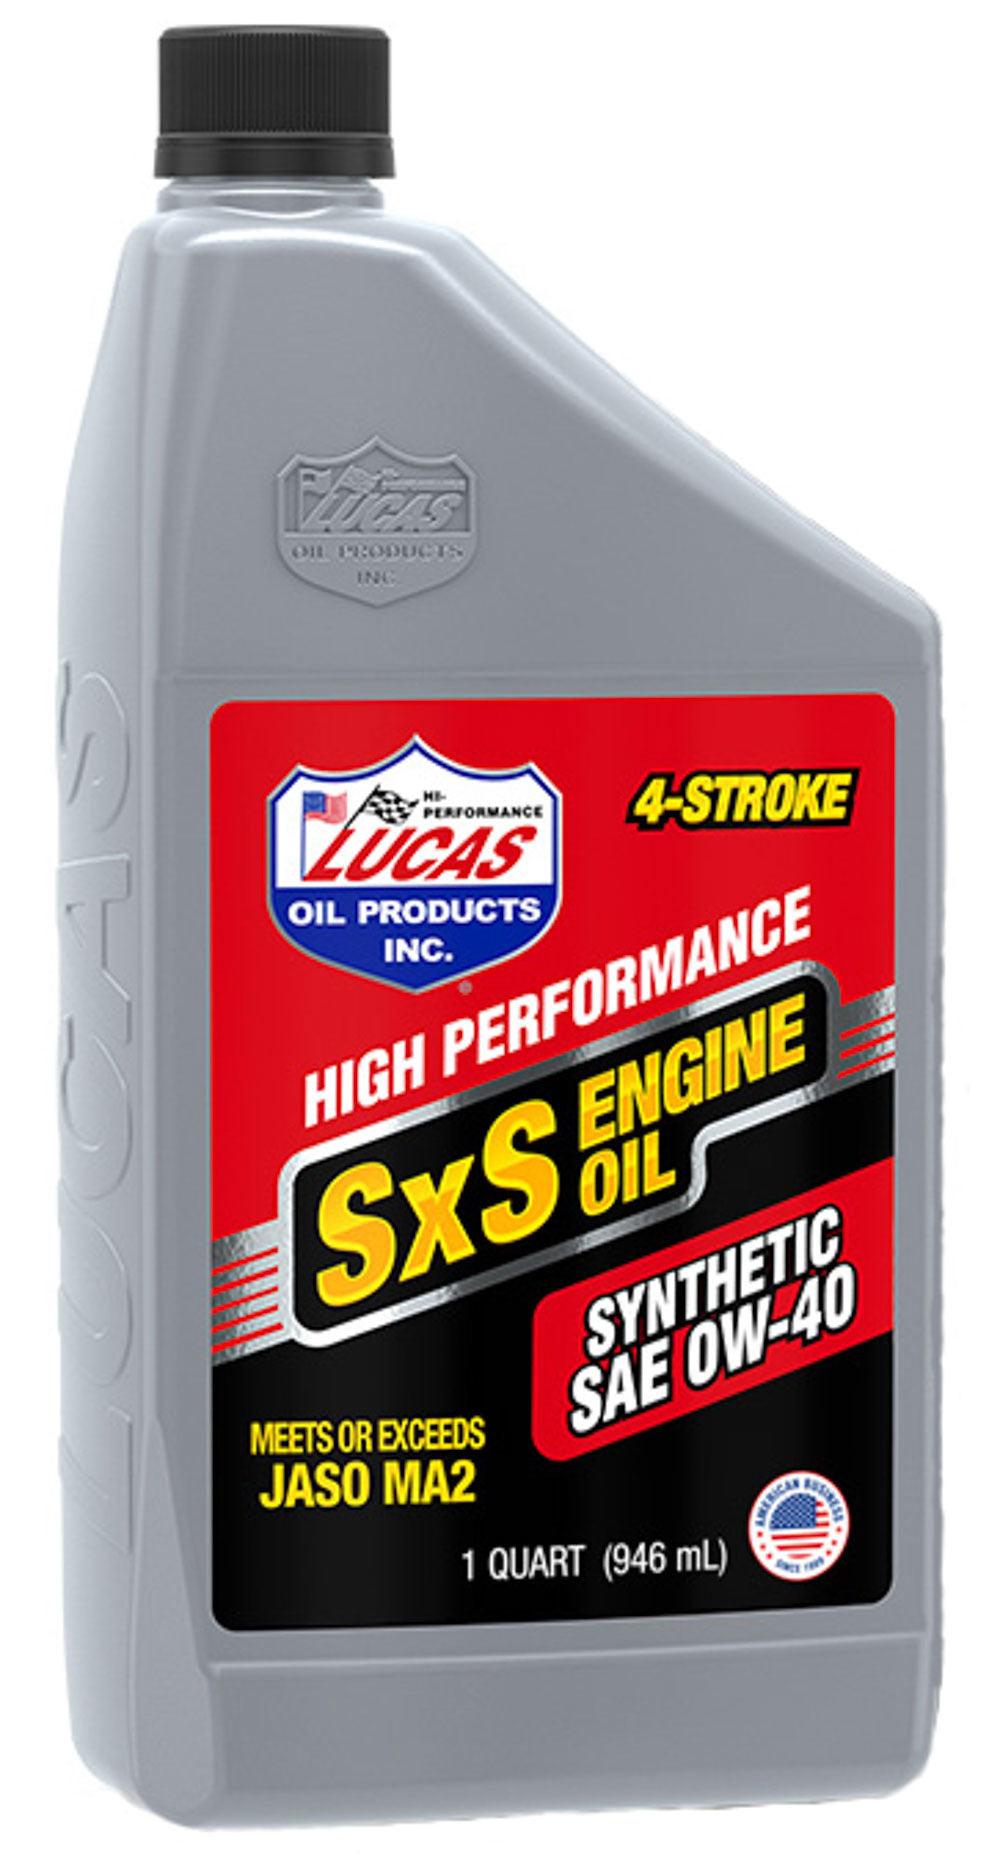 Synthetic 0w40 SXS Oil 1 Quart - Burlile Performance Products